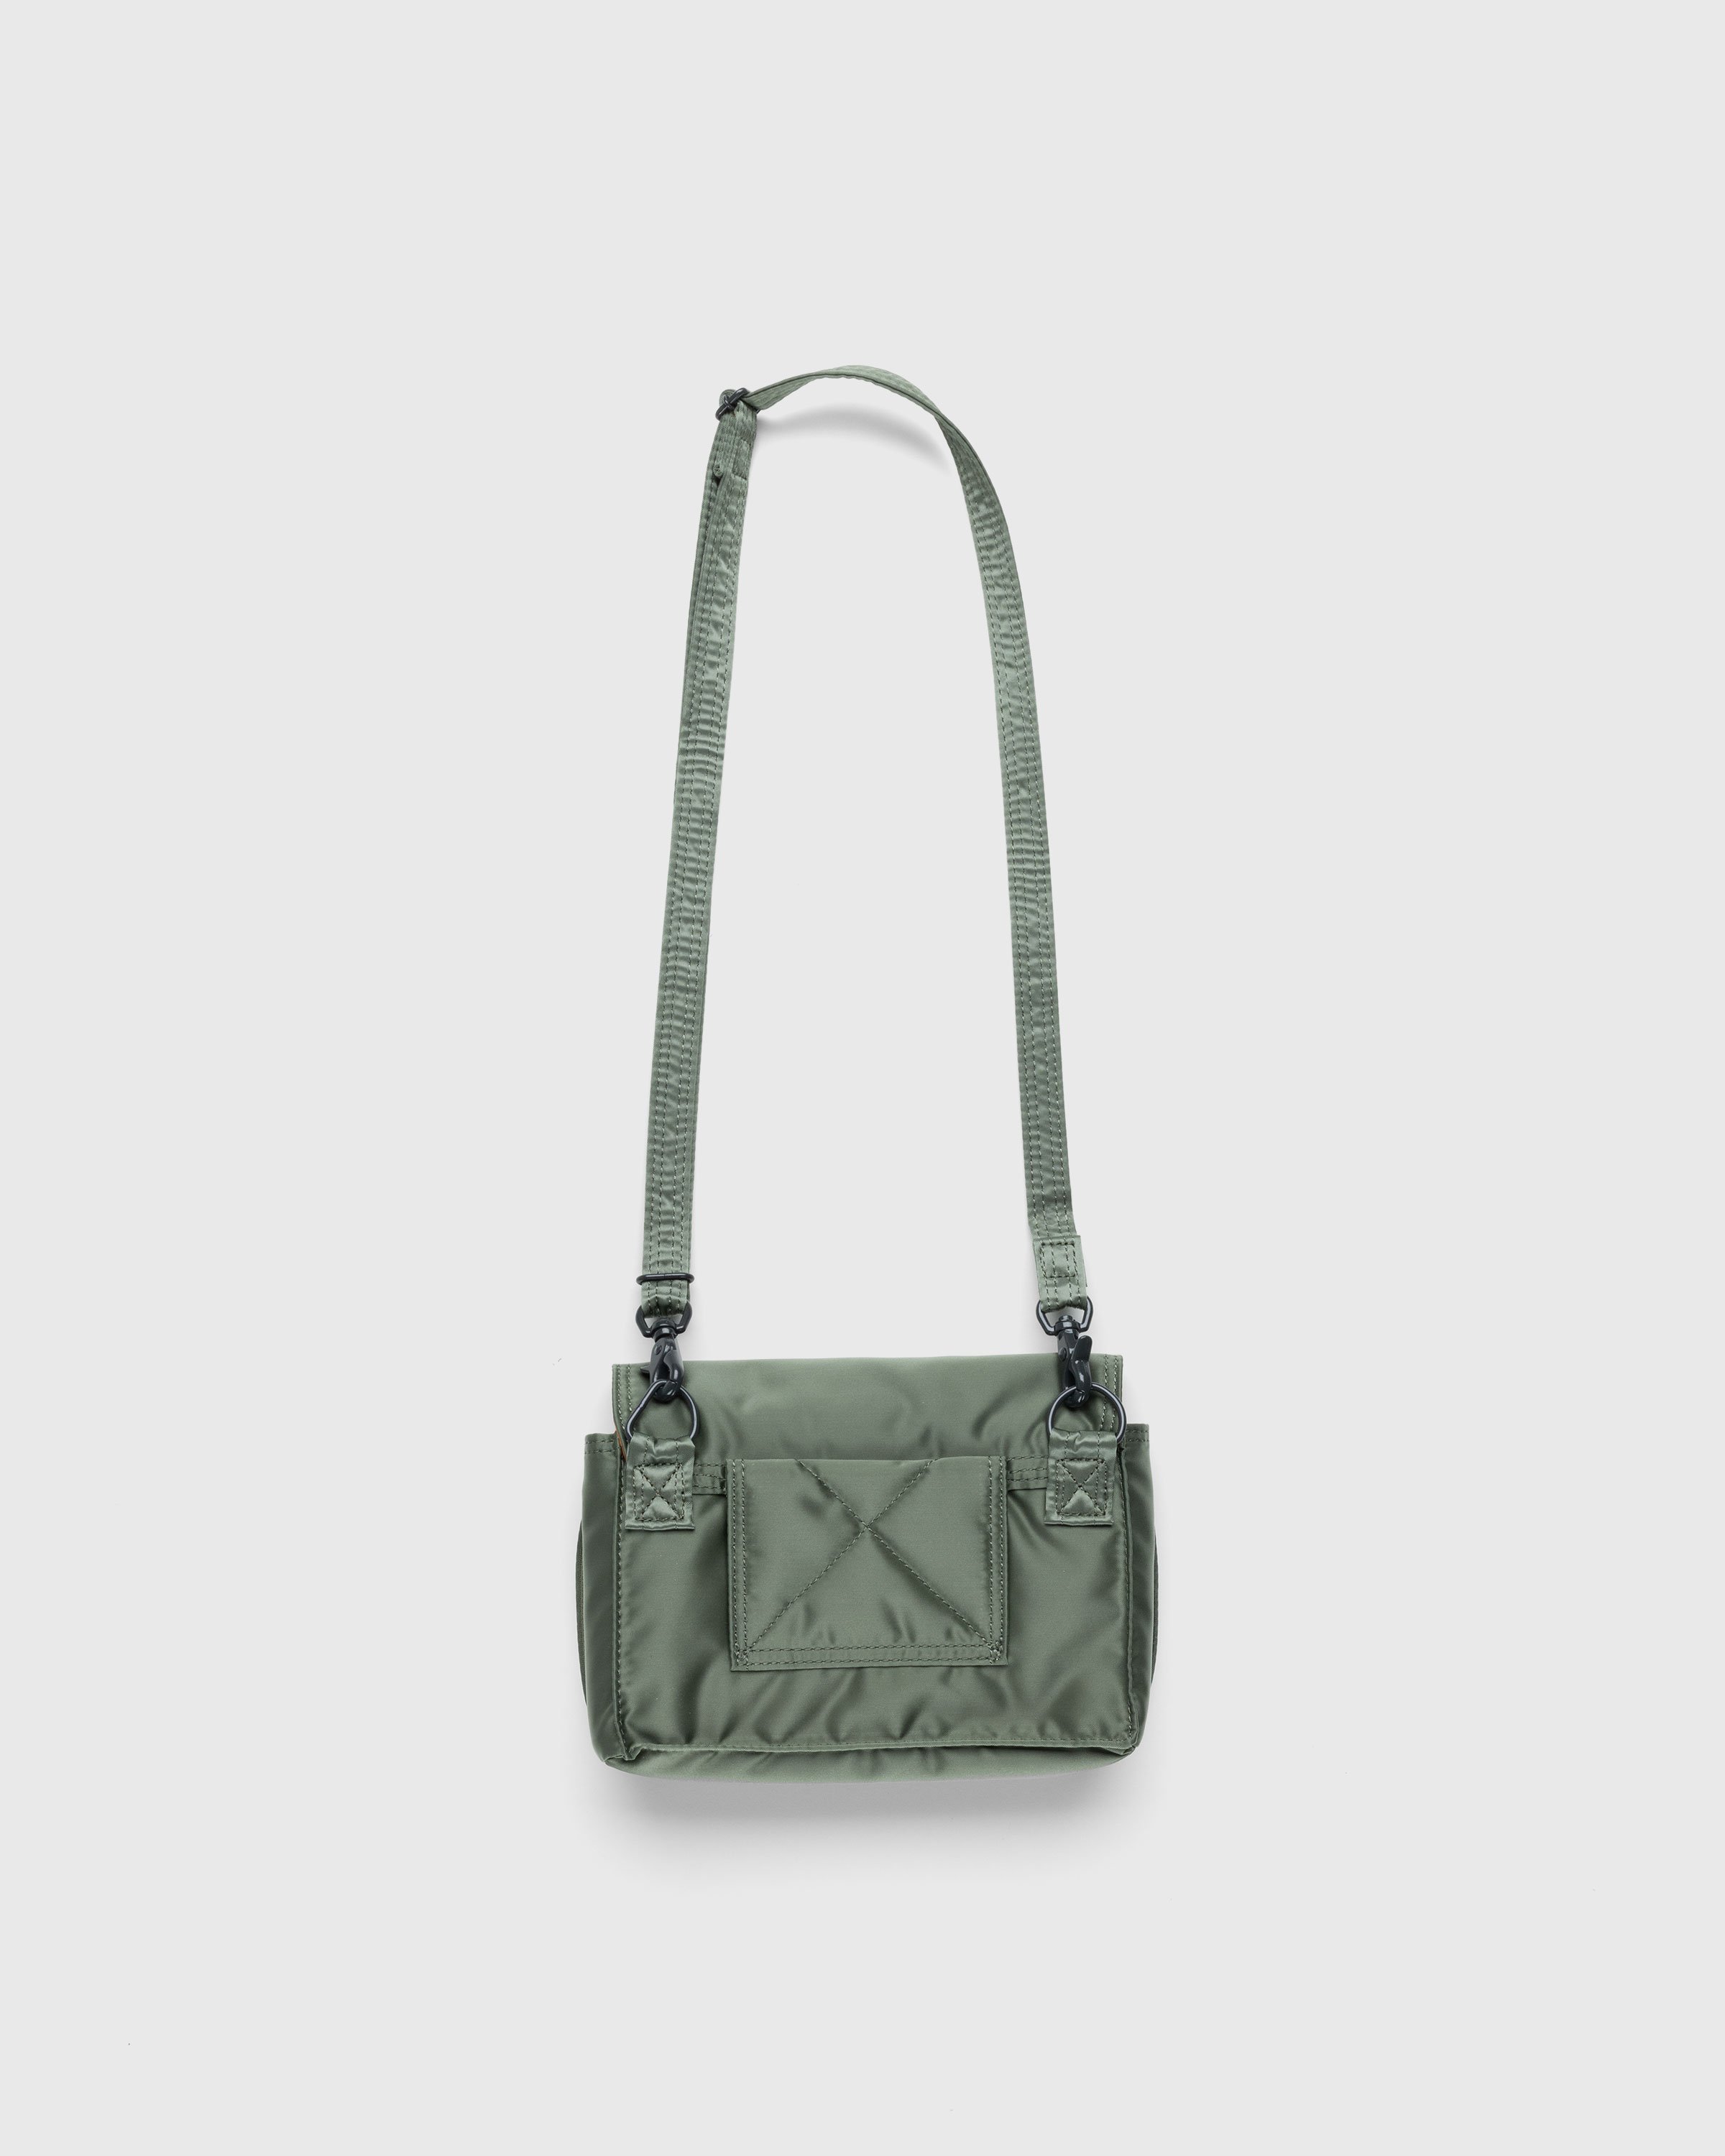 Porter-Yoshida & Co. - TANKER SHOULDER BAG - Accessories - Green - Image 2